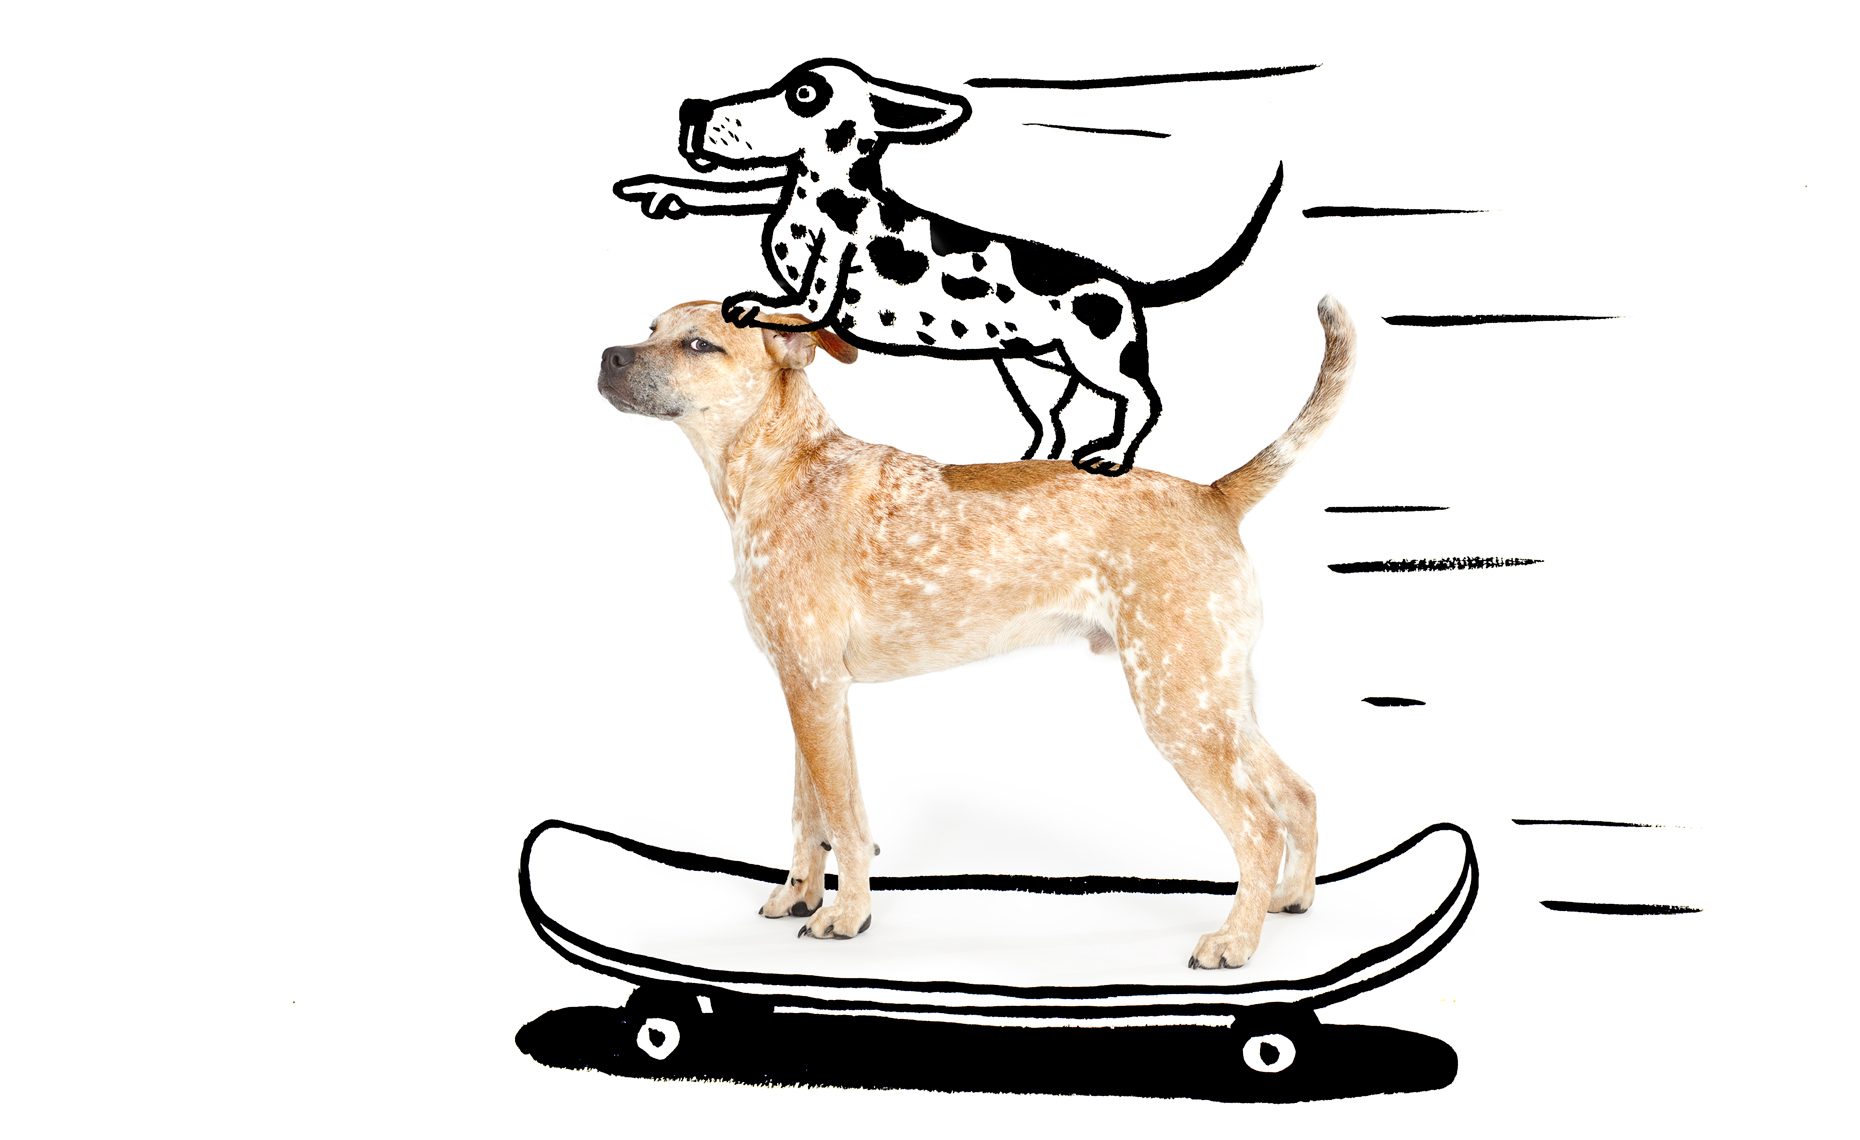 Cattle dog mix on skateboard